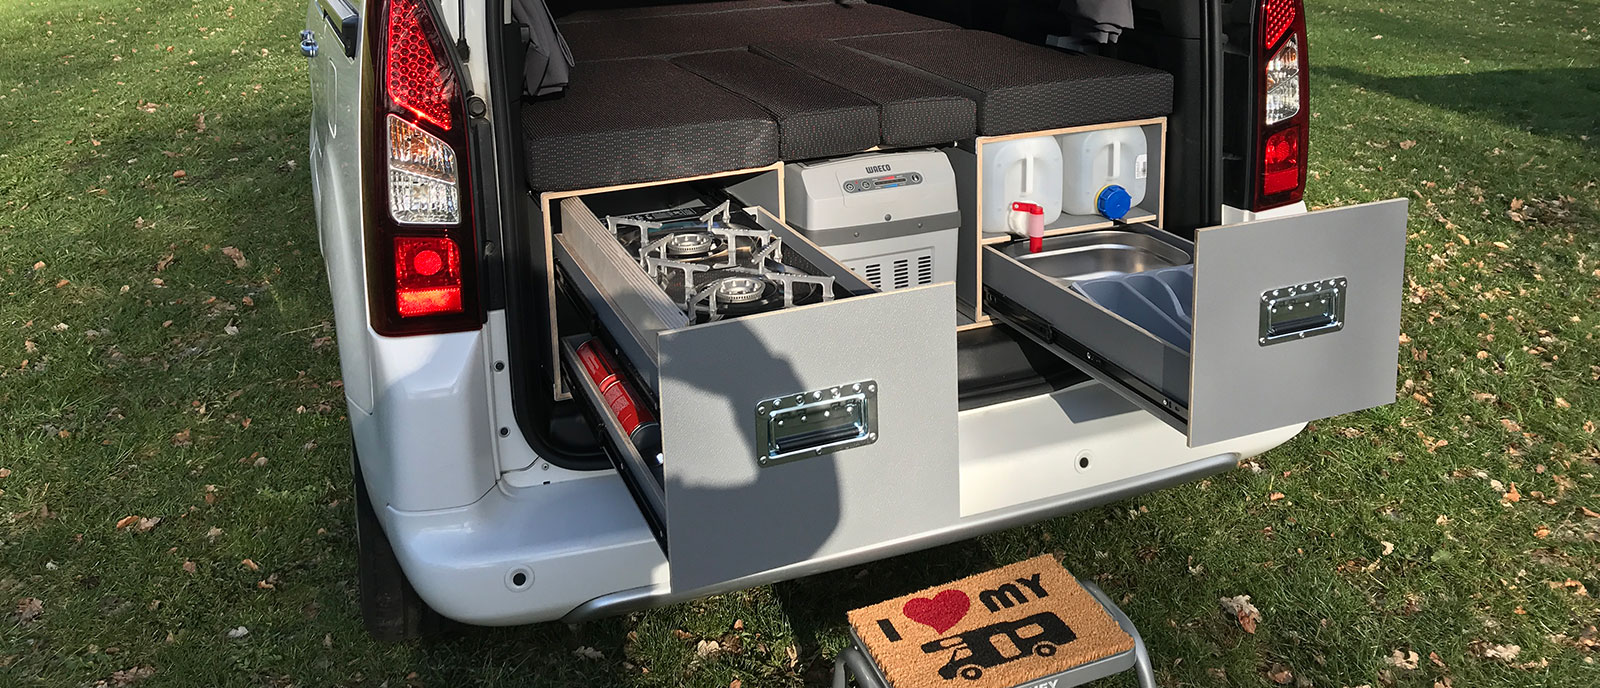 Moonbox Campingbox 111cm für Renault (Grand) Kangoo 1+2, VW Caddy